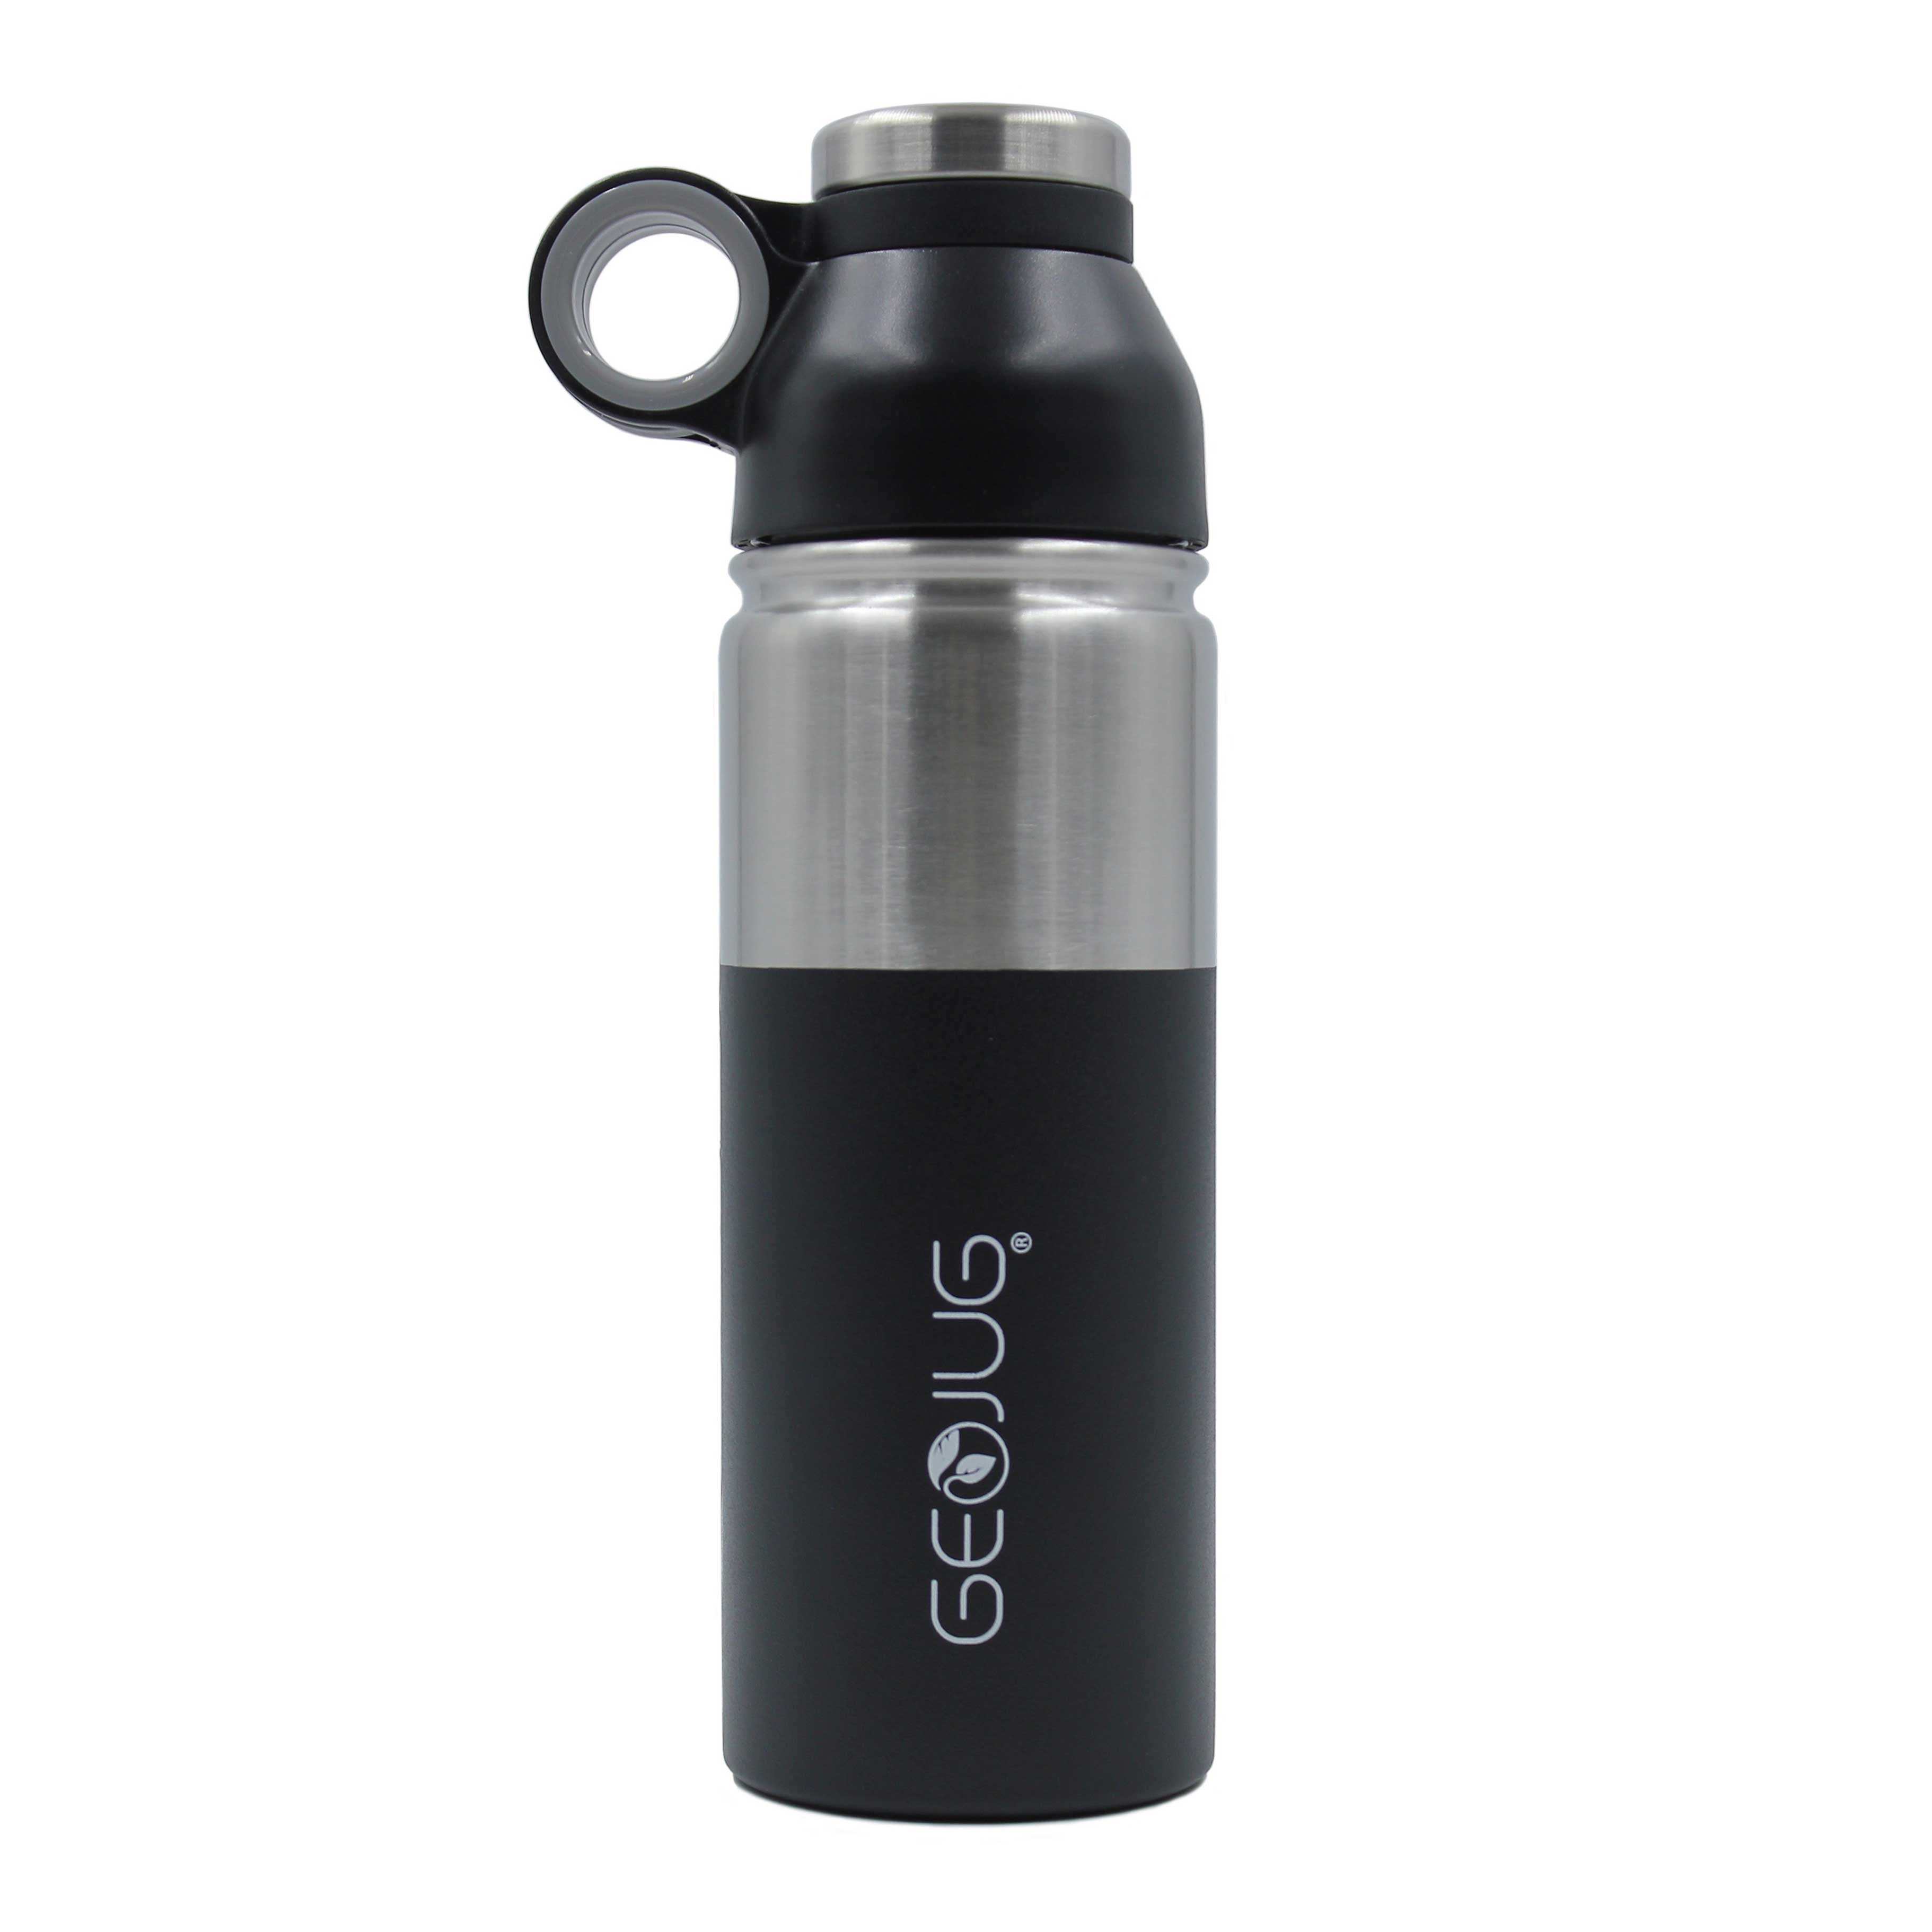 SWISSGEAR 18 oz Stainless Steel Insulated Bottle - Black